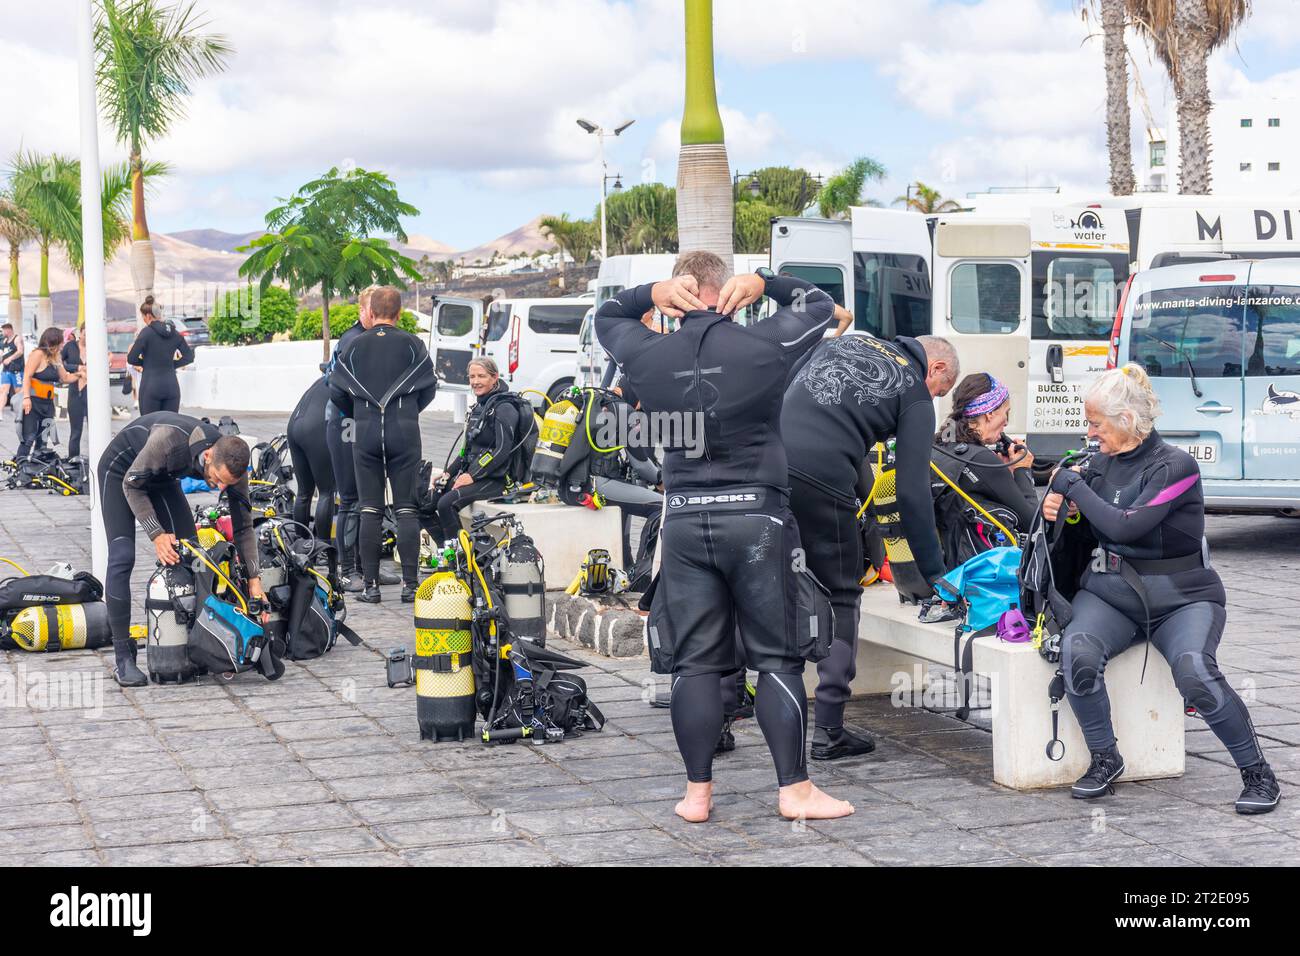 Scuba diving schoool preparing at Playa Chica, Puerto del Carmen, Lanzarote, Canary Islands, Kingdom of Spain Stock Photo